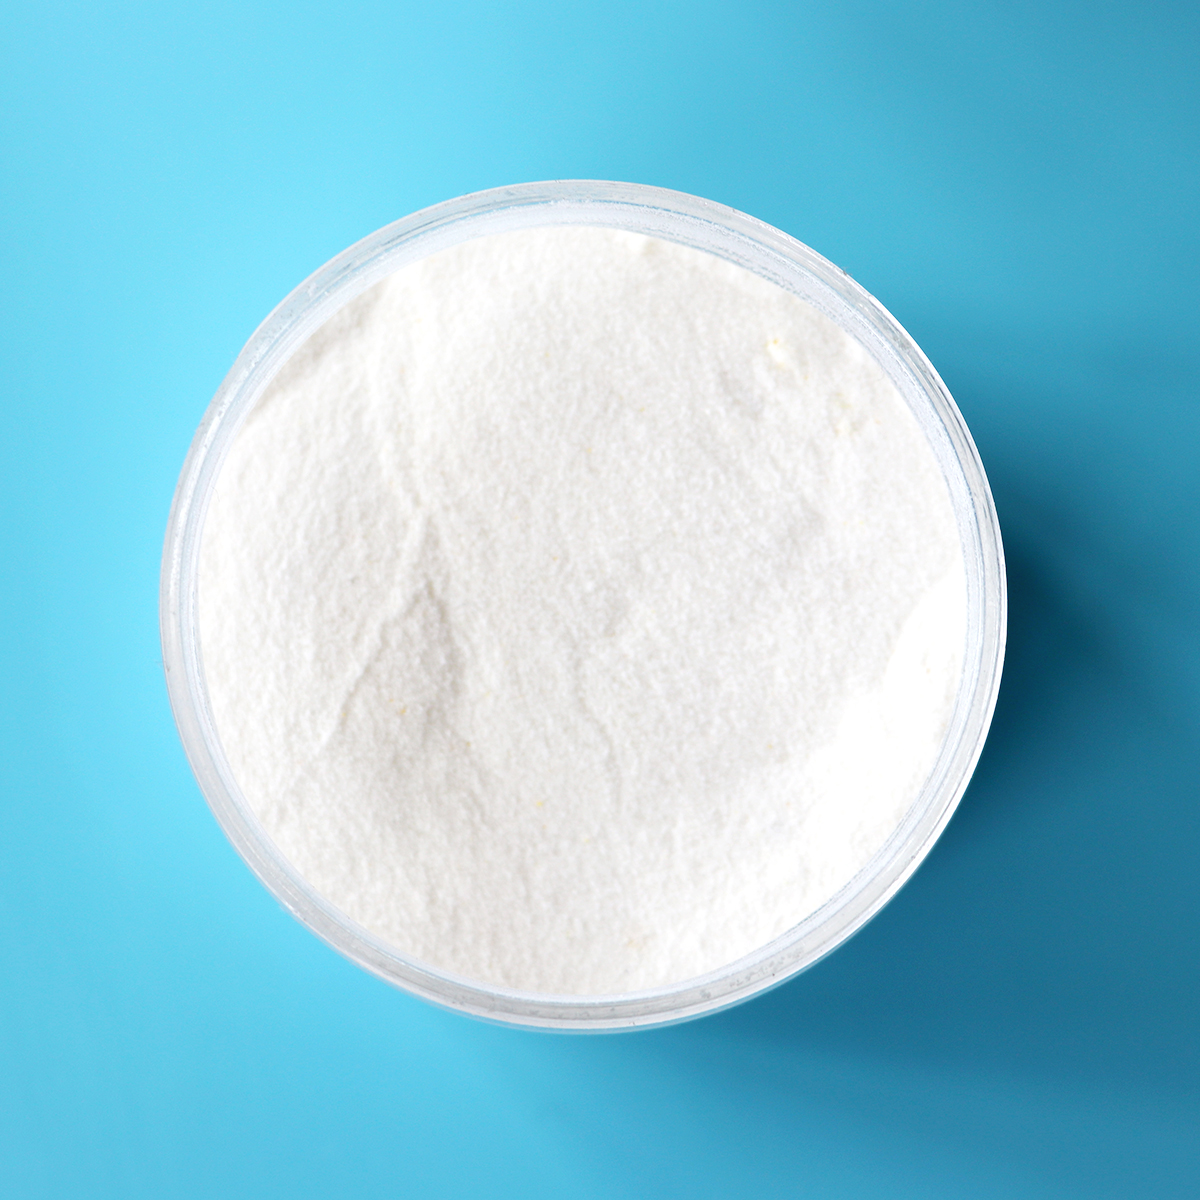 PAC(Poly aluminium Chloride-white powder)